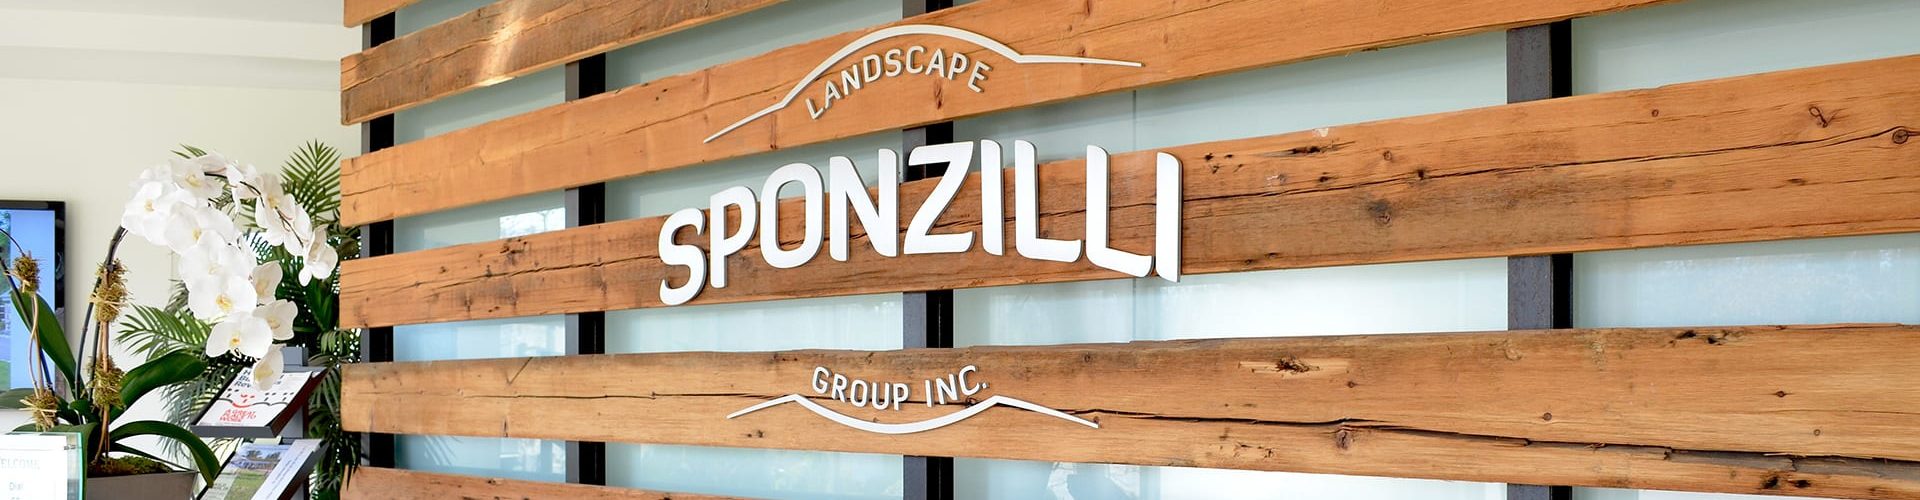 Sponzilli Landscape Group Headquarters